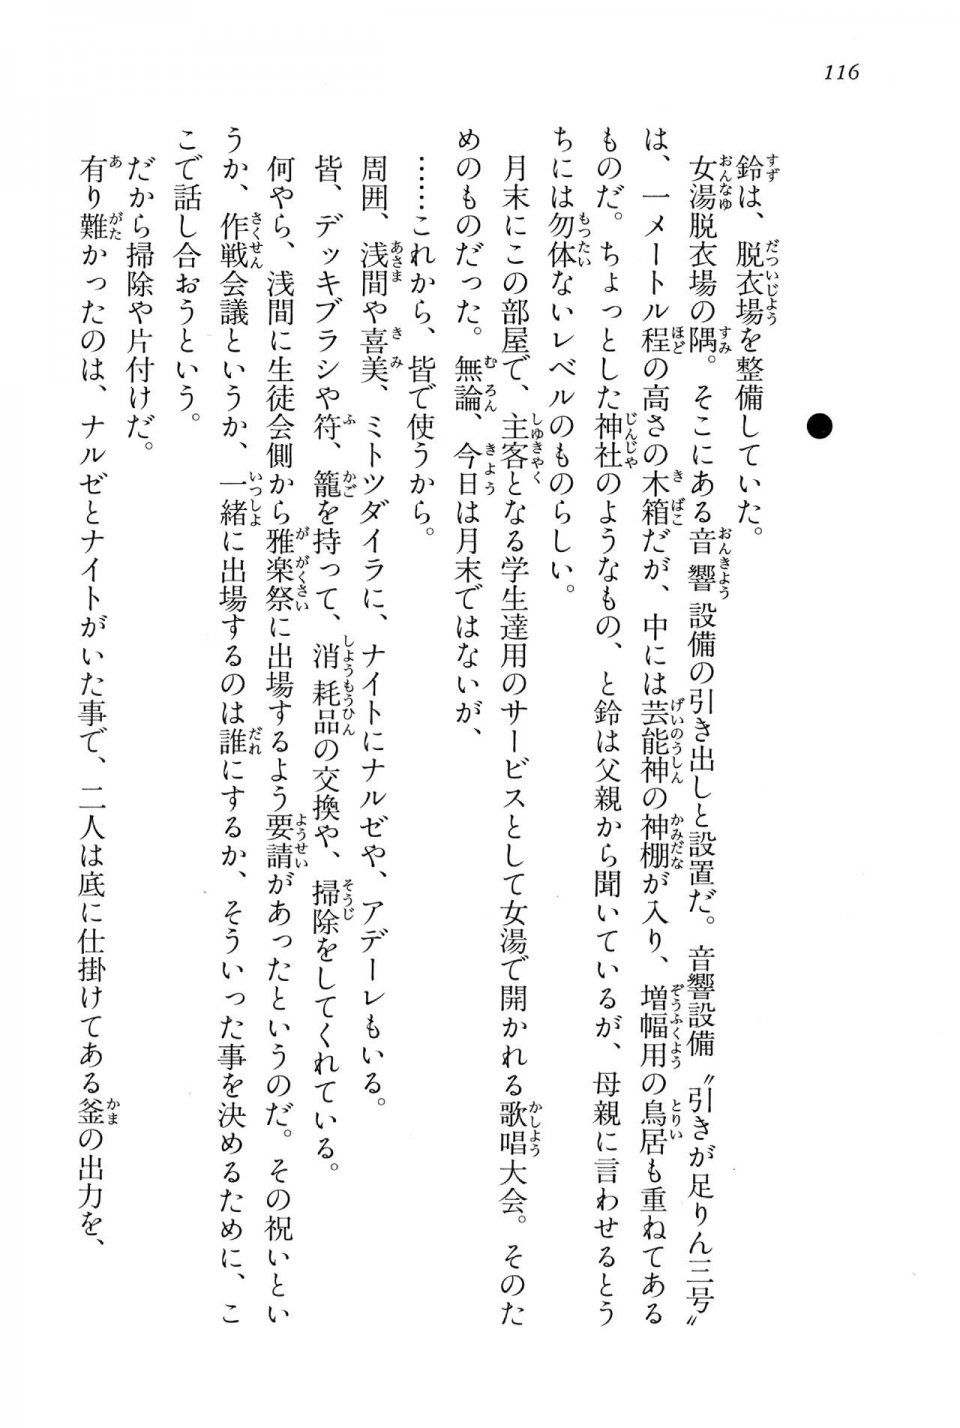 Kyoukai Senjou no Horizon BD Special Mininovel Vol 4(2B) - Photo #120